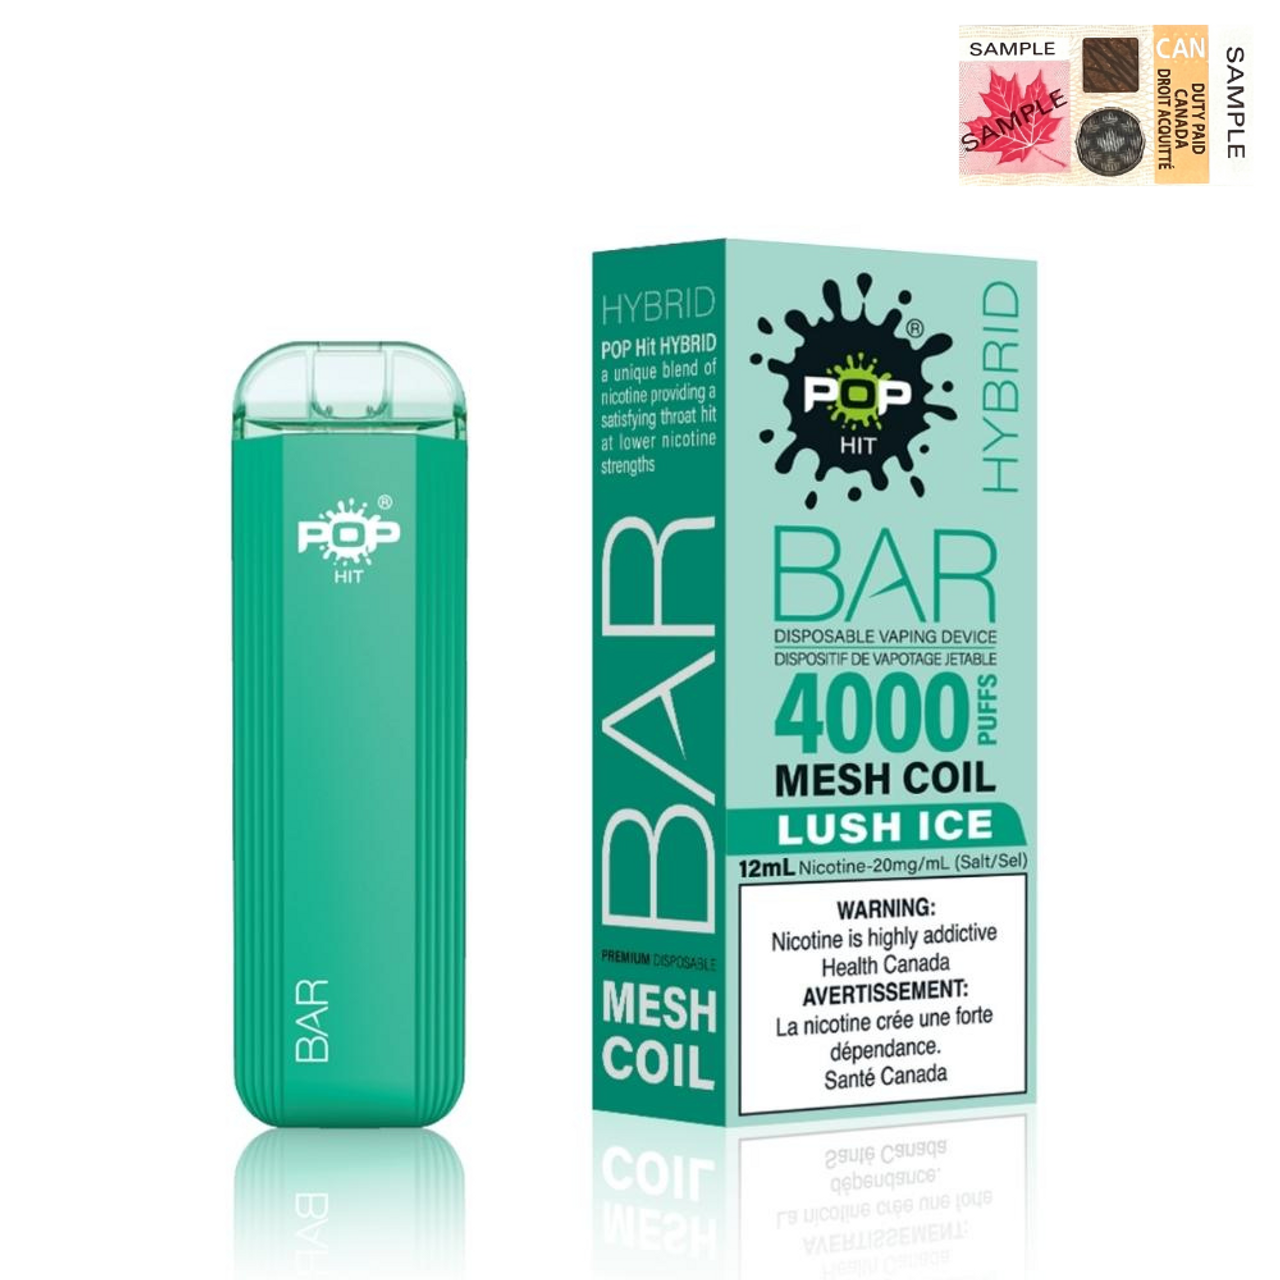 (Stamped) Lush Ice Pop Hybrid Bar 4000 Puff Disposable Vape Ct 5